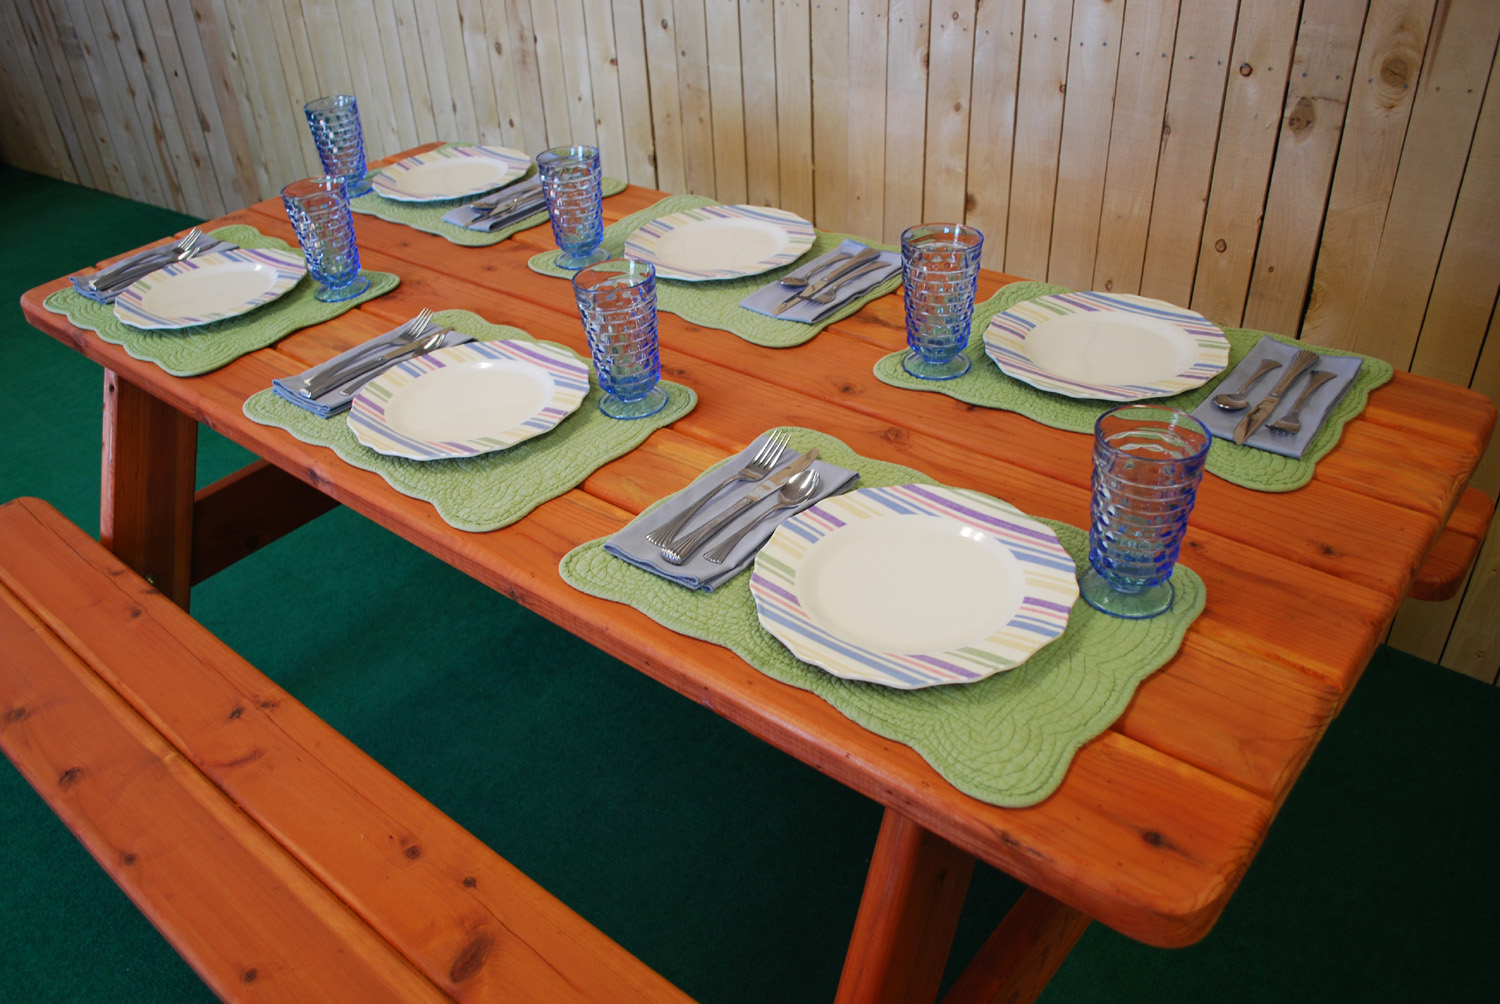 72" redwood picnic table